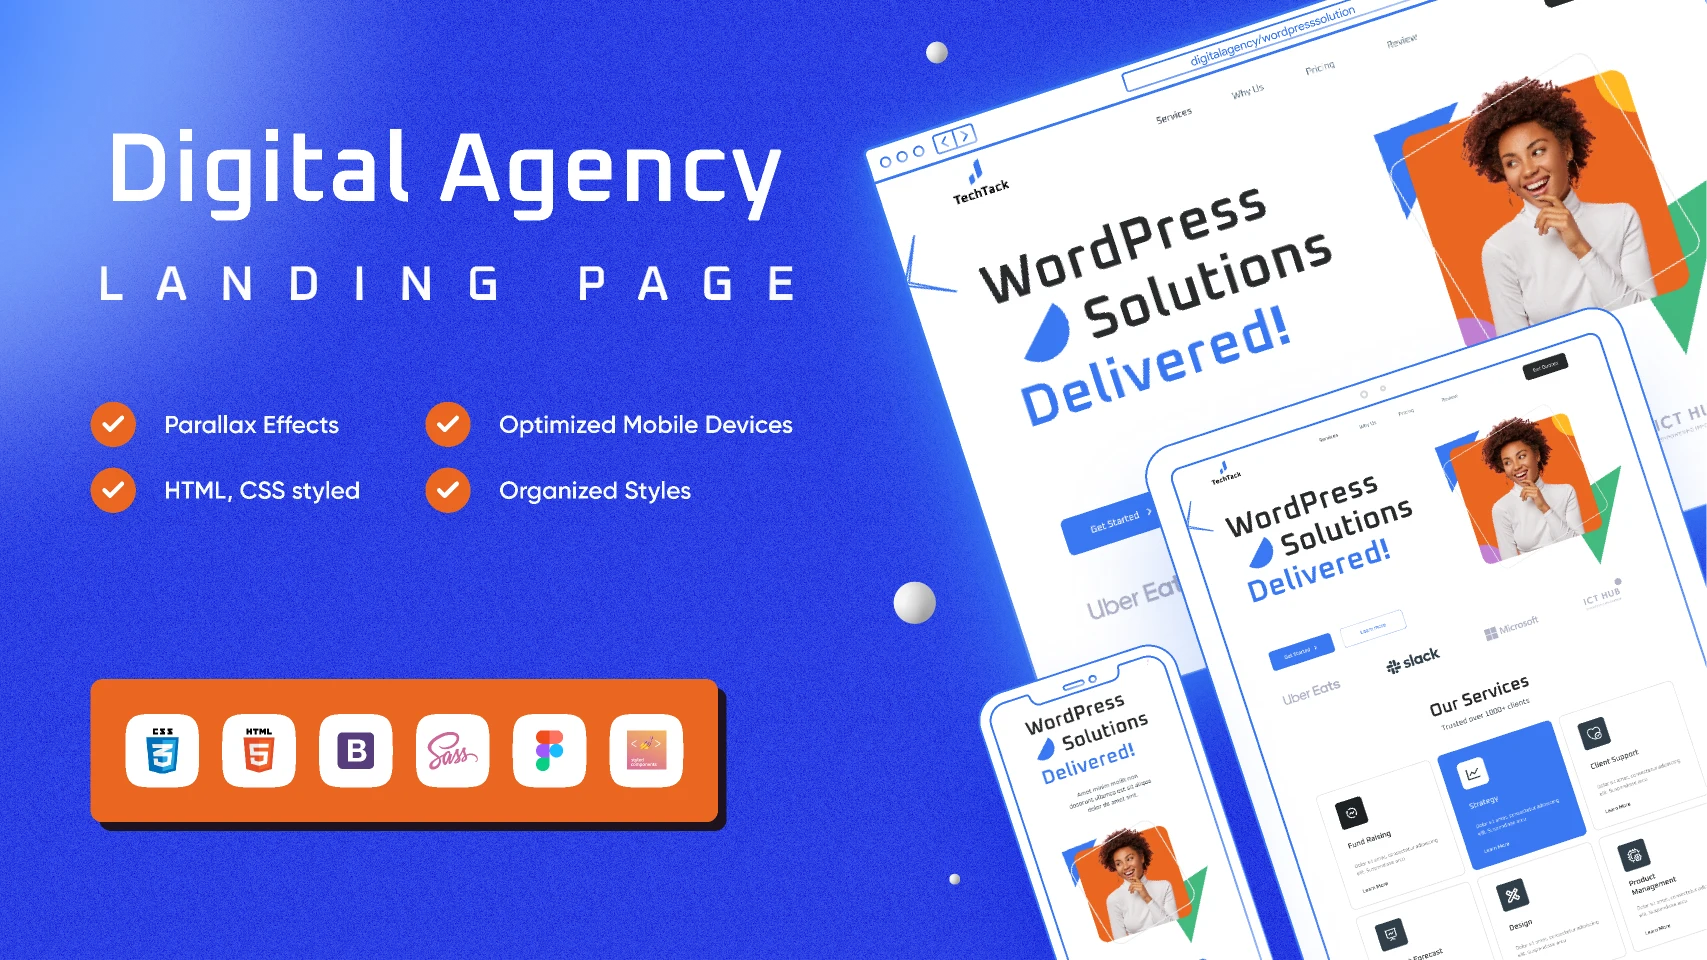 WordPress Solution Digital Agency Landing Page UI UX Design & Development for Figma and Adobe XD